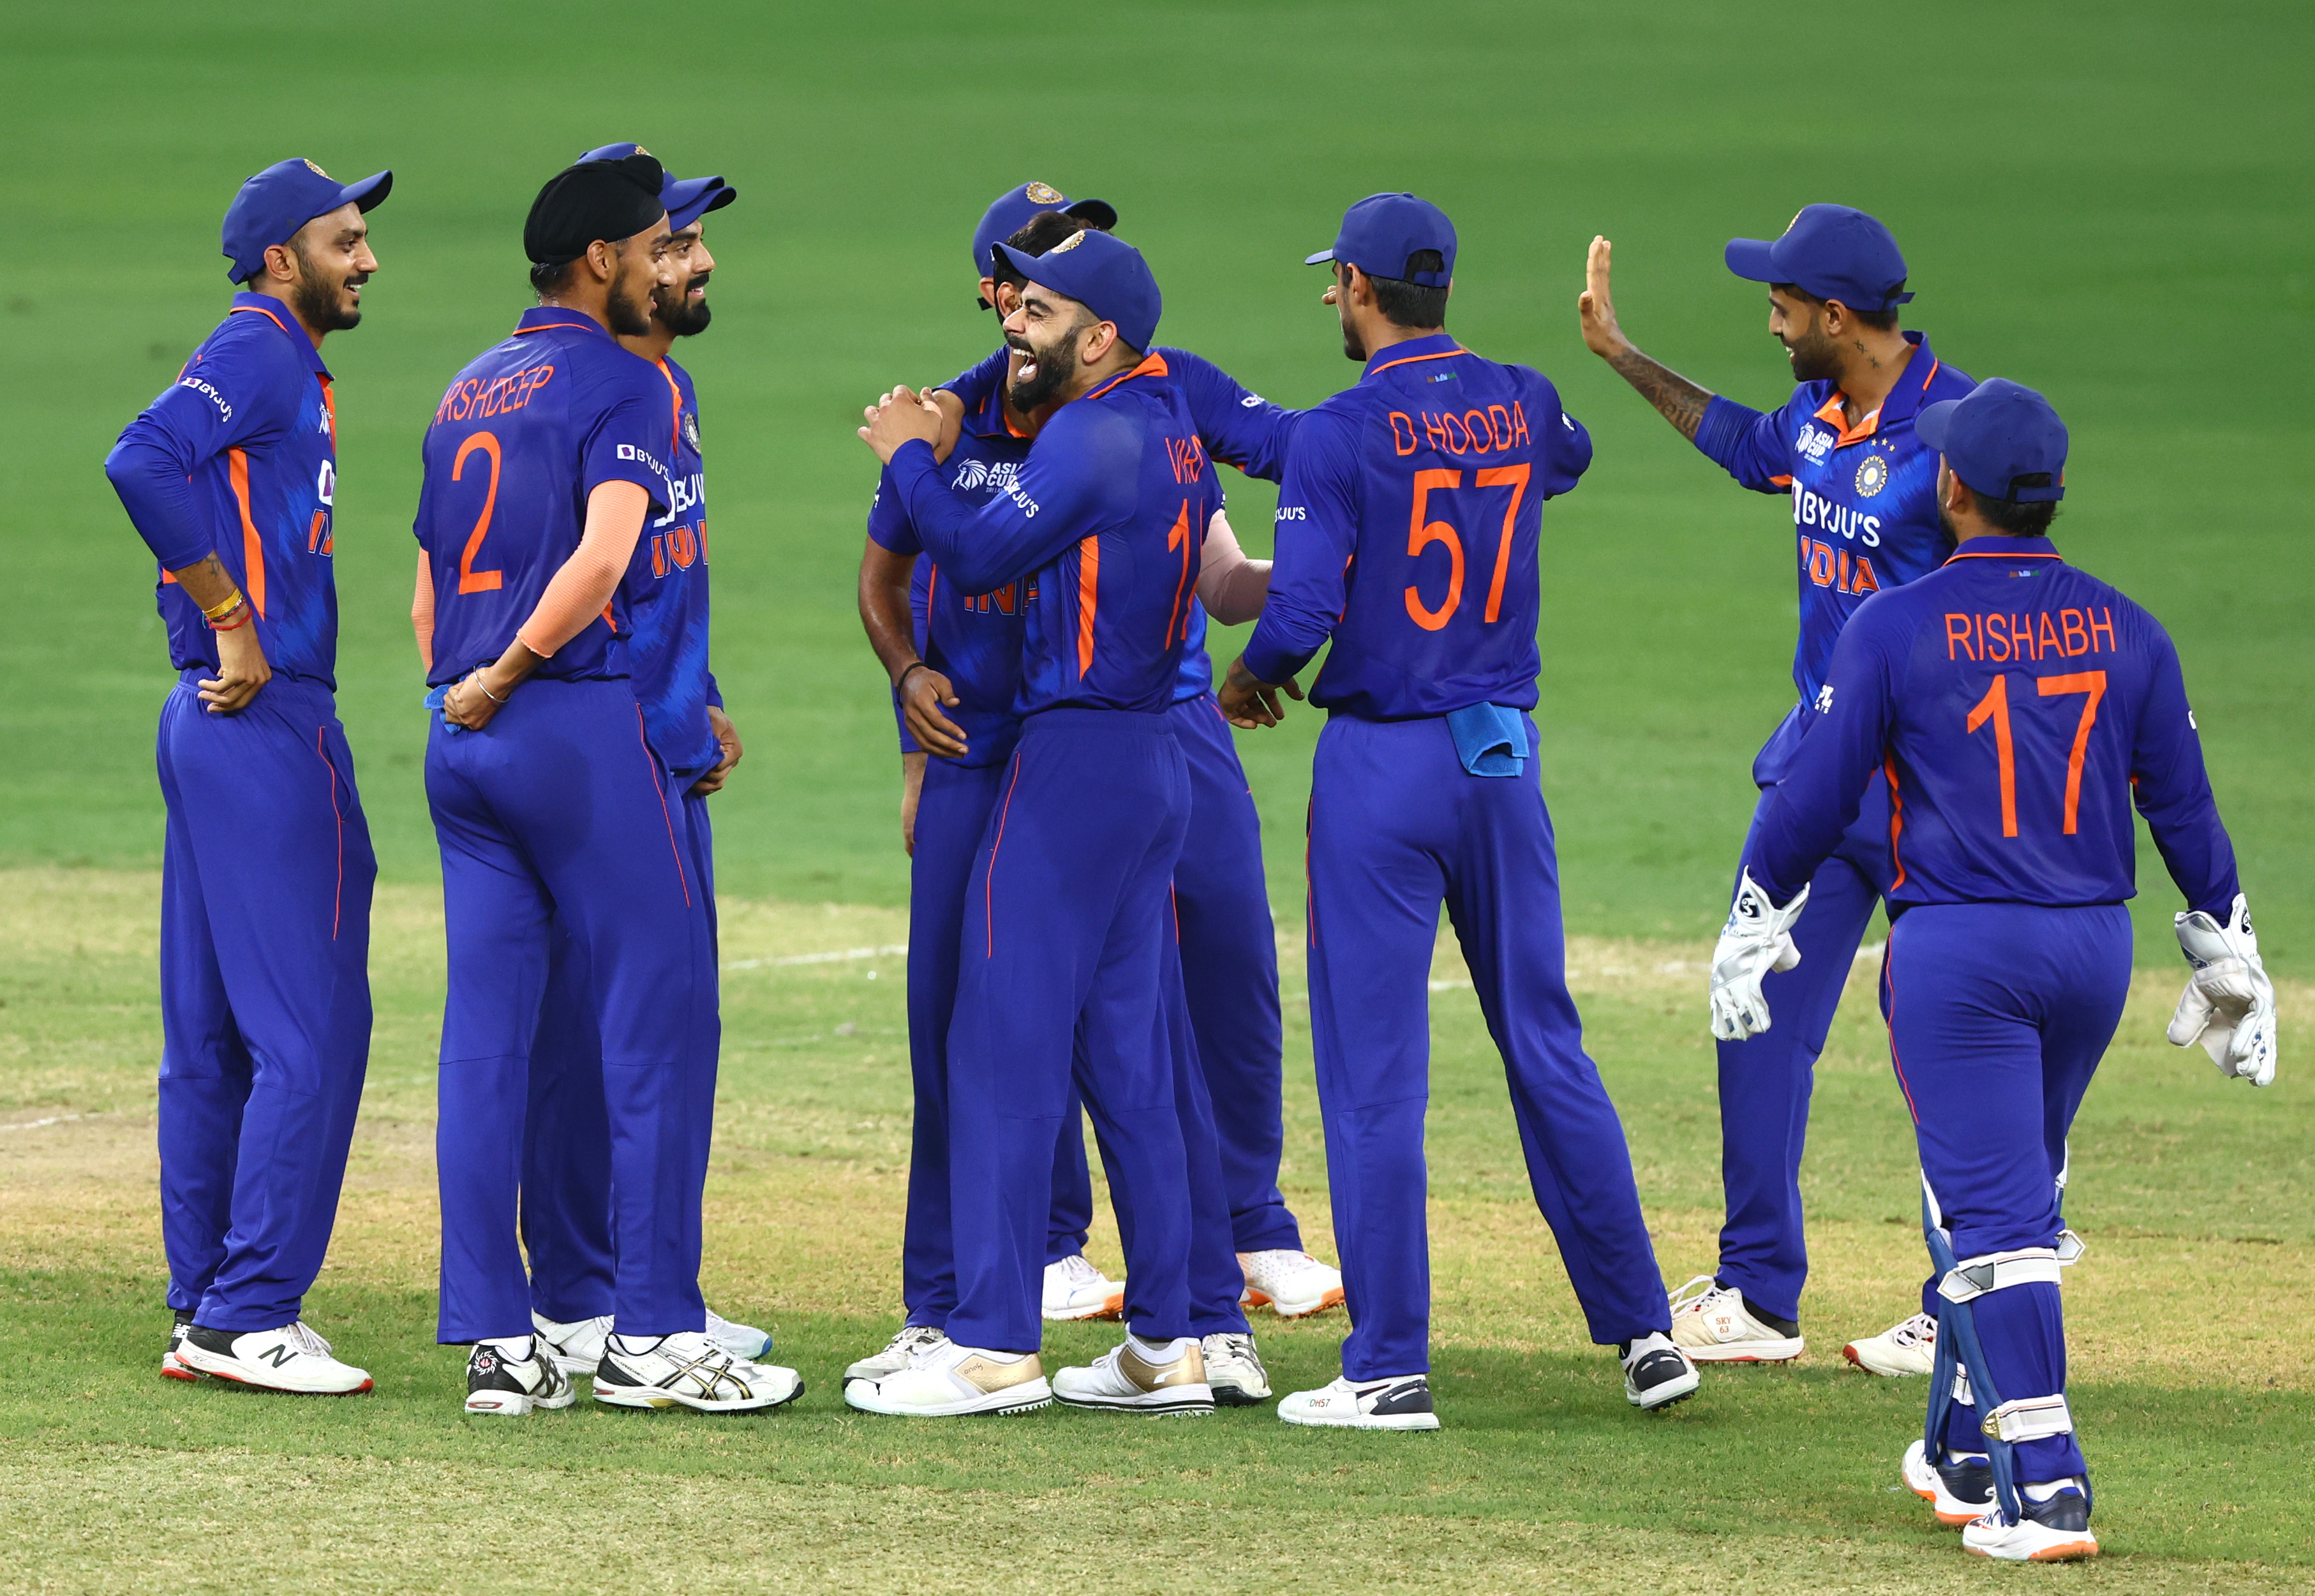 IND BAN ODI TICKETS: India vs Bangladesh 1st ODI TICKETS go on SALE from today, Bangladesh Cricket Board says ‘Huge Demand from INDIA’: Follow IND vs BAN LIVE